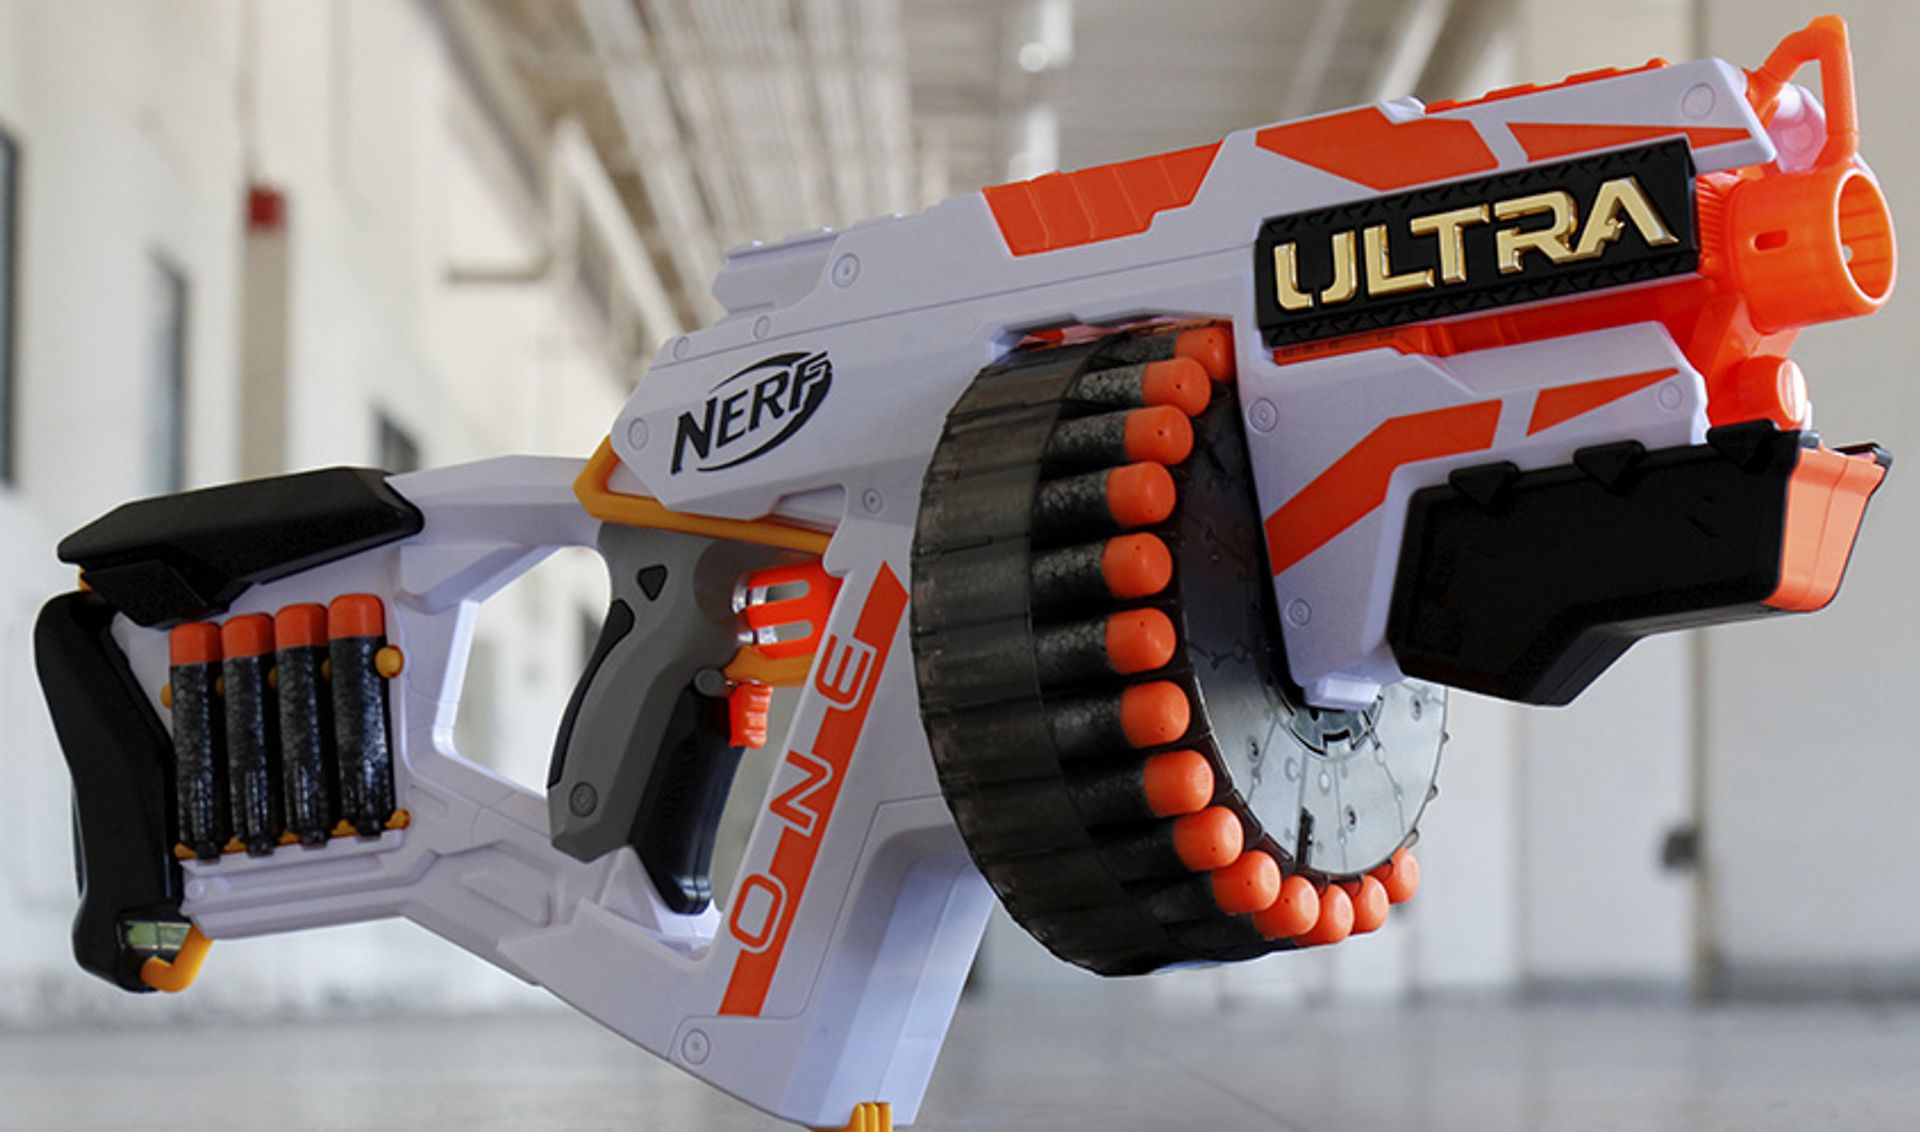 Nerf Ultra One Blaster